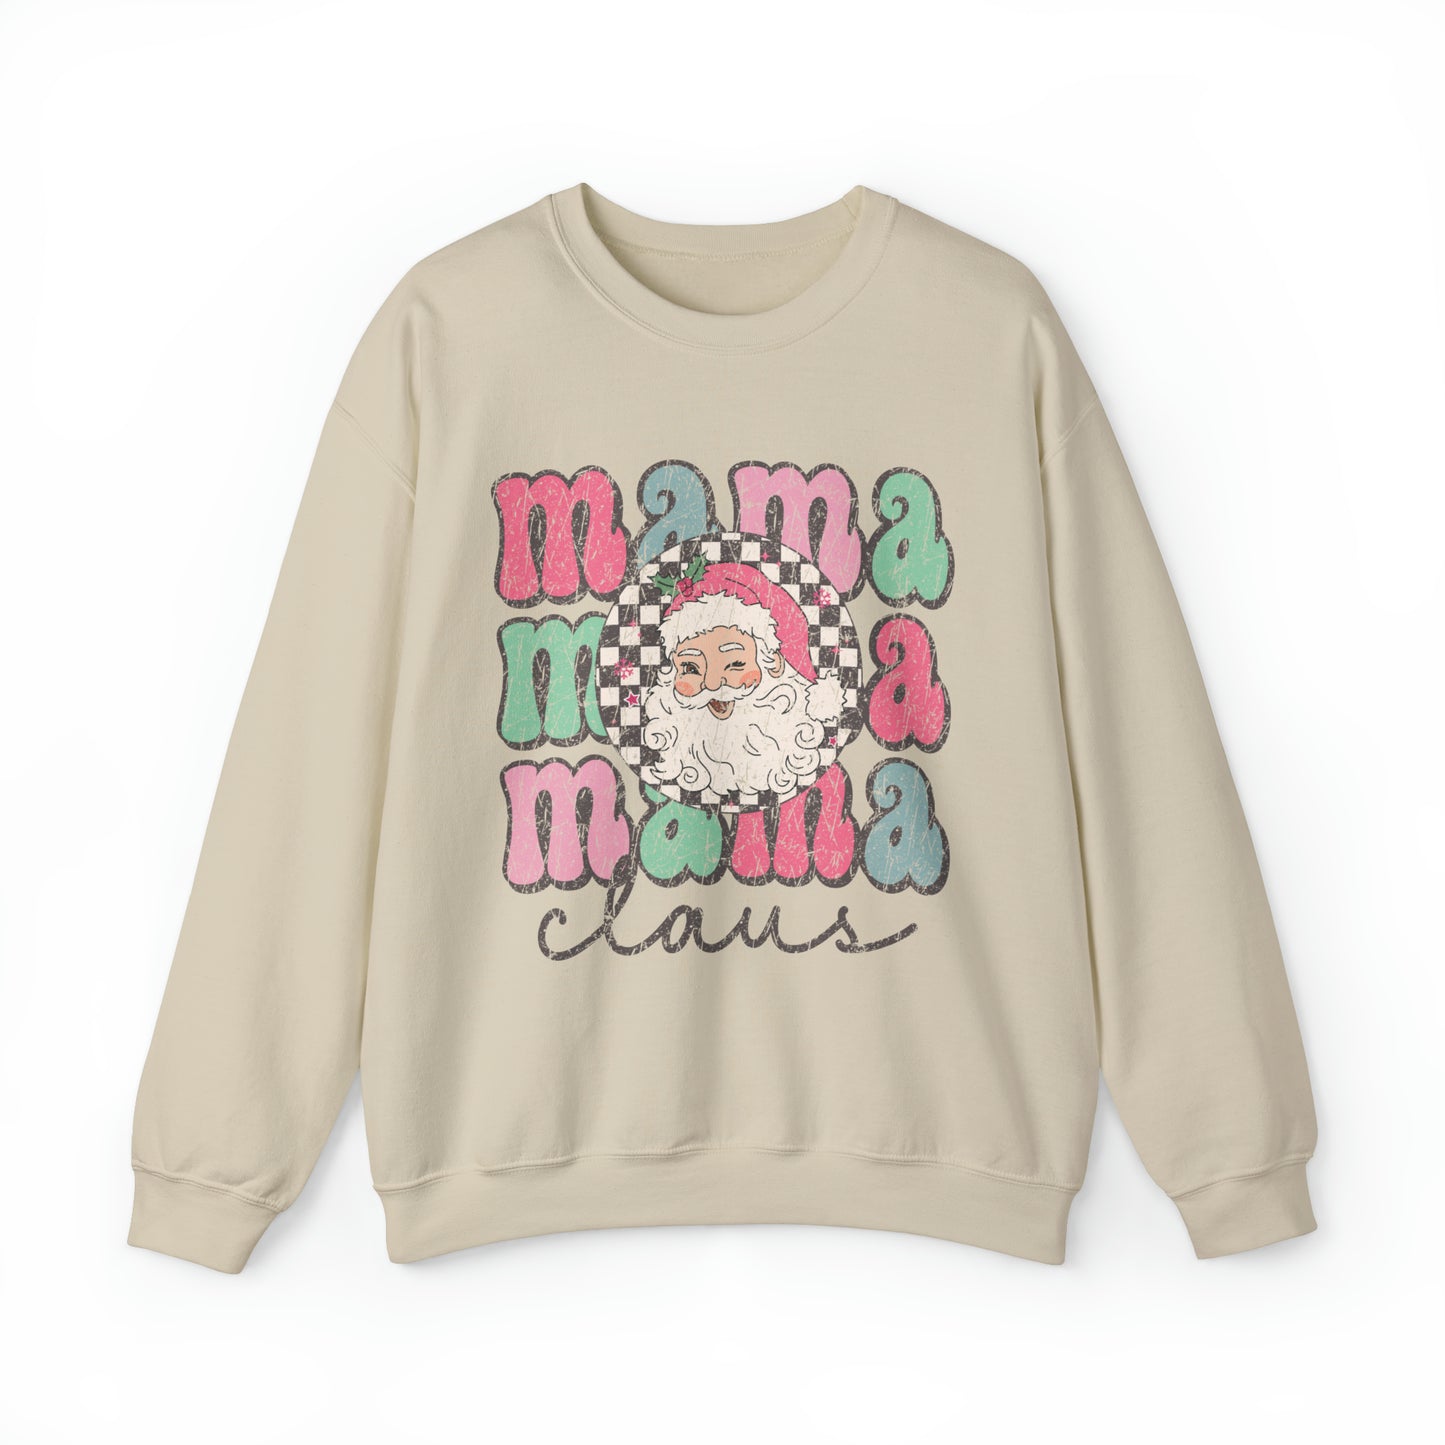 MAMA Claus Retro Distressed Women's Christmas Sweatshirt